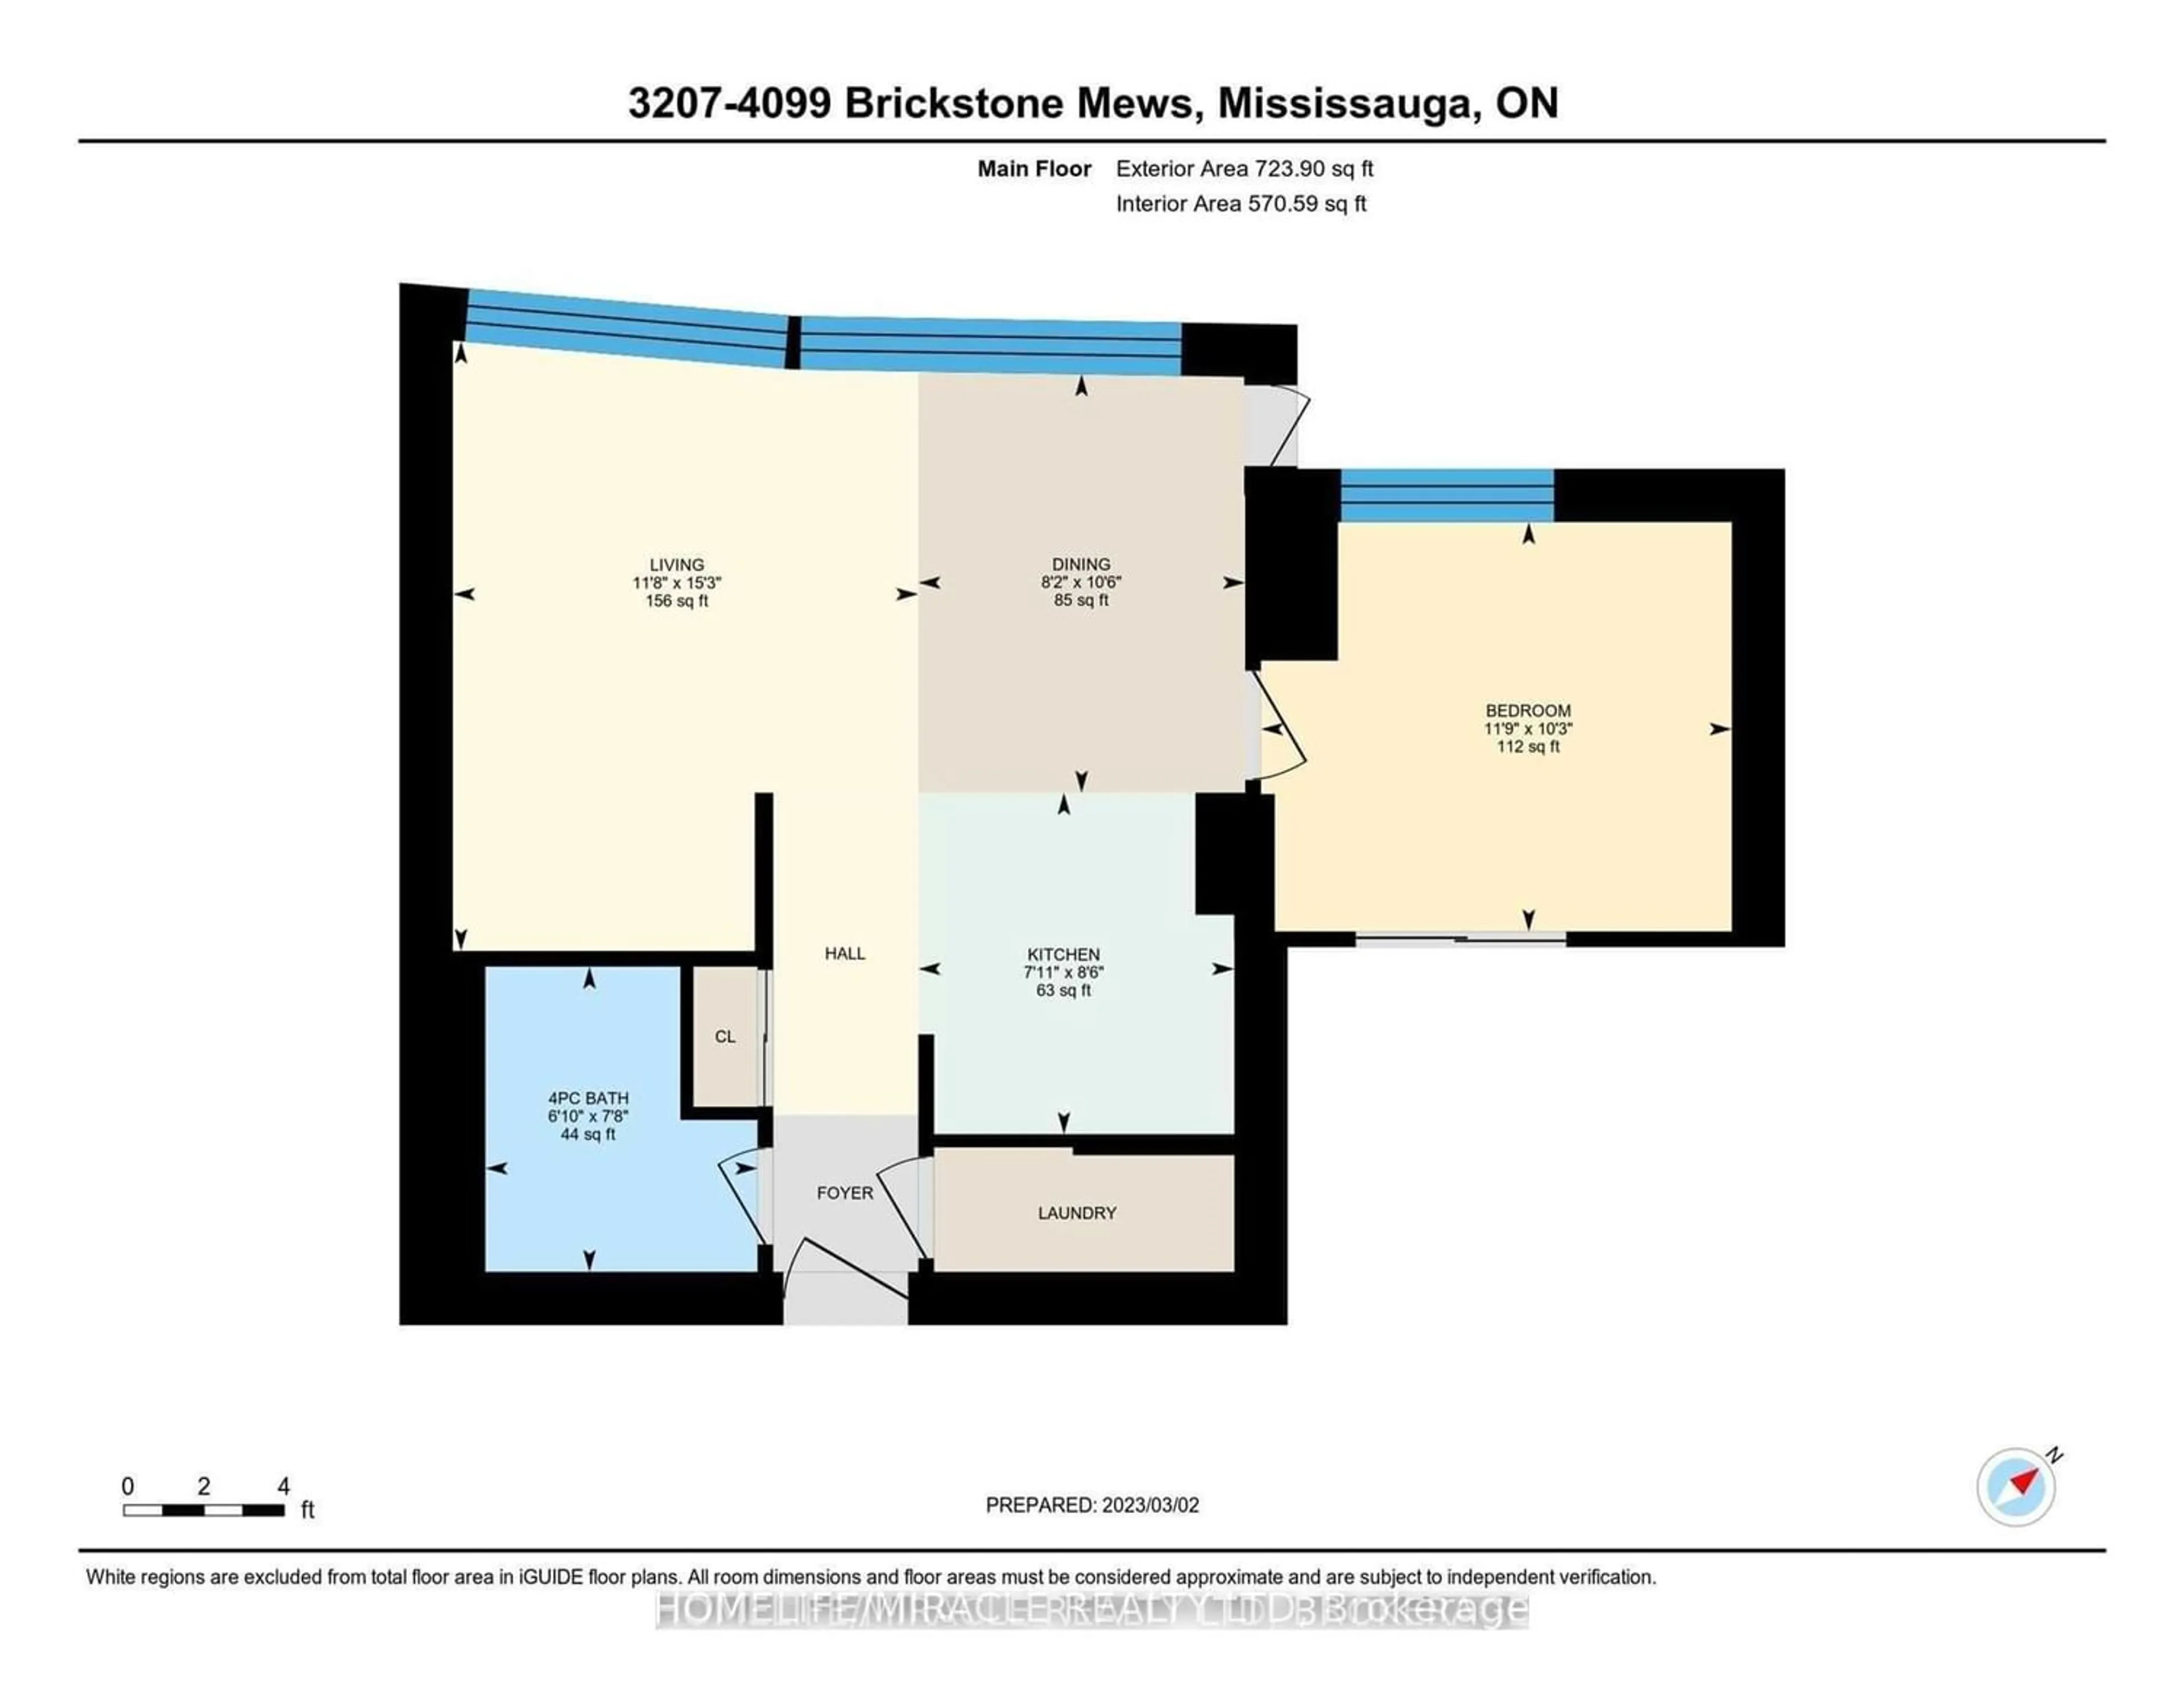 Floor plan for 4099 Brickstone Mews #3207, Mississauga Ontario L5B 0G2